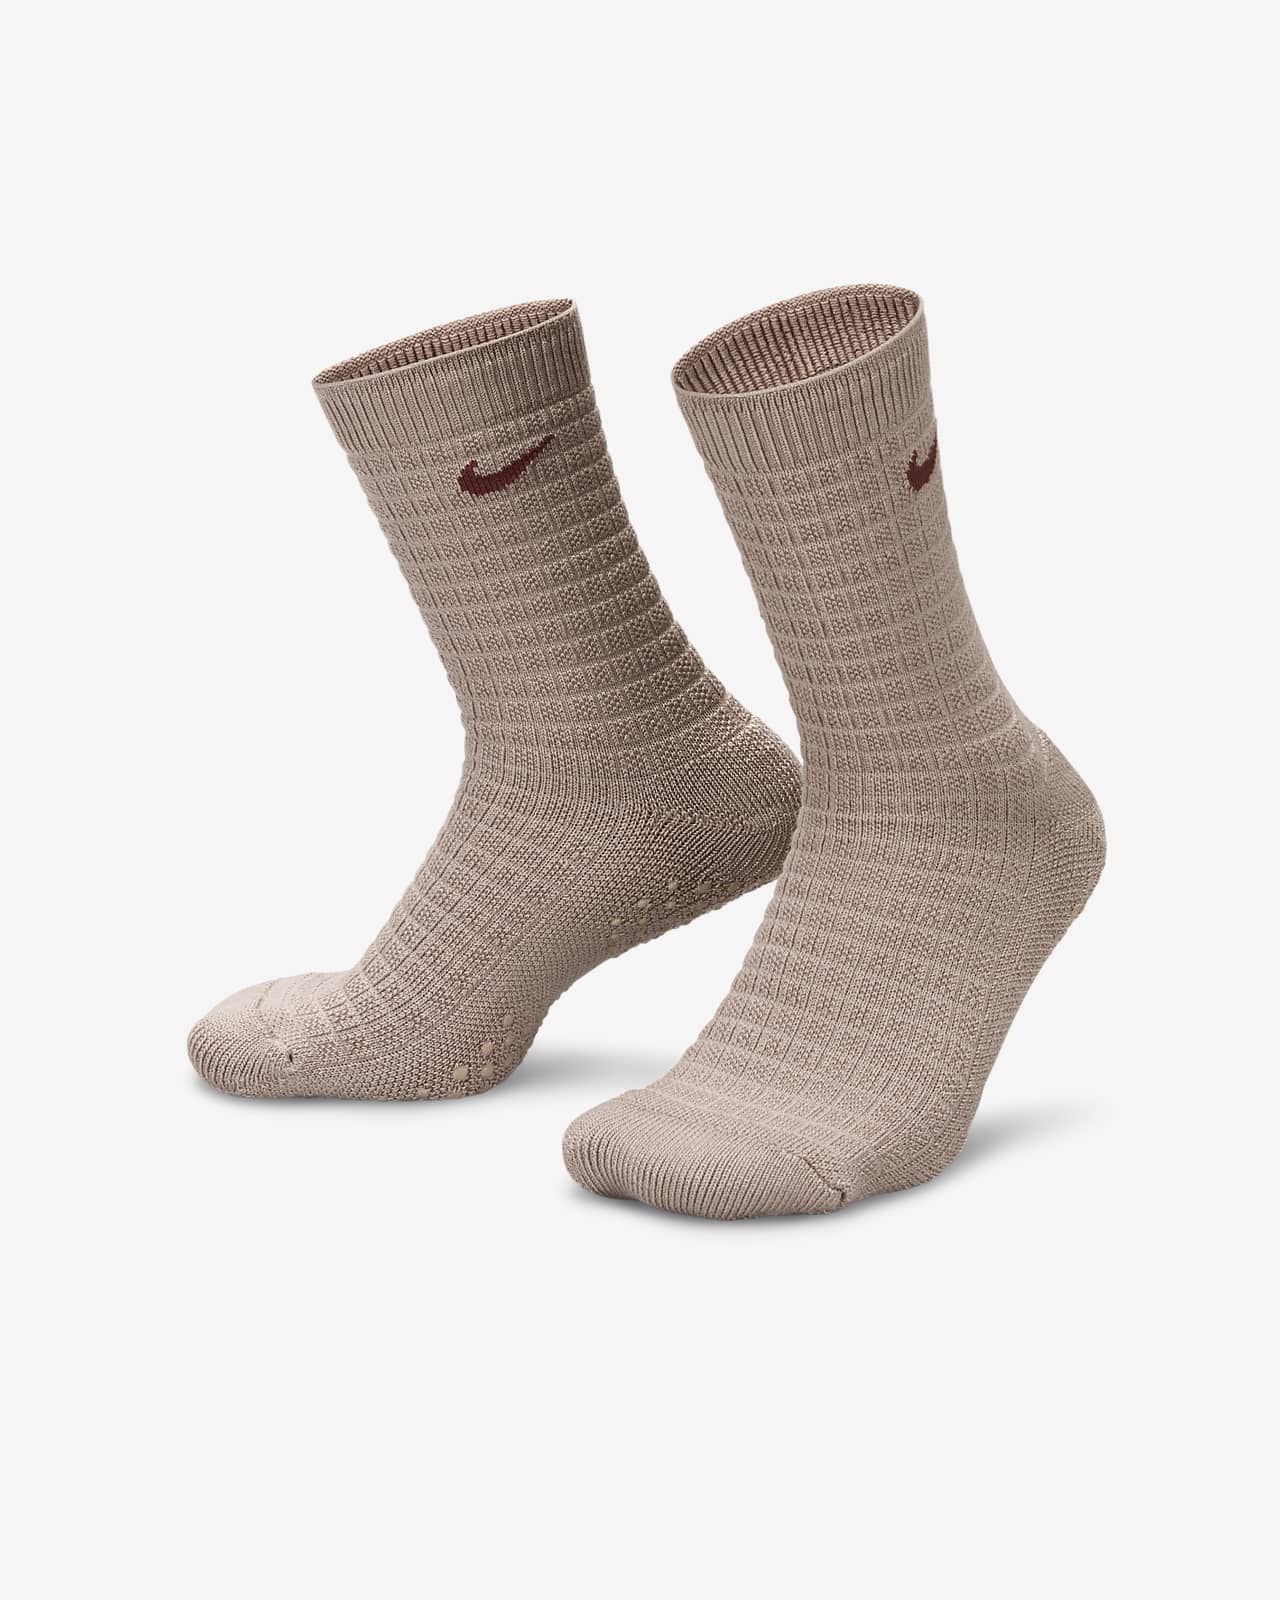 nike winter socks